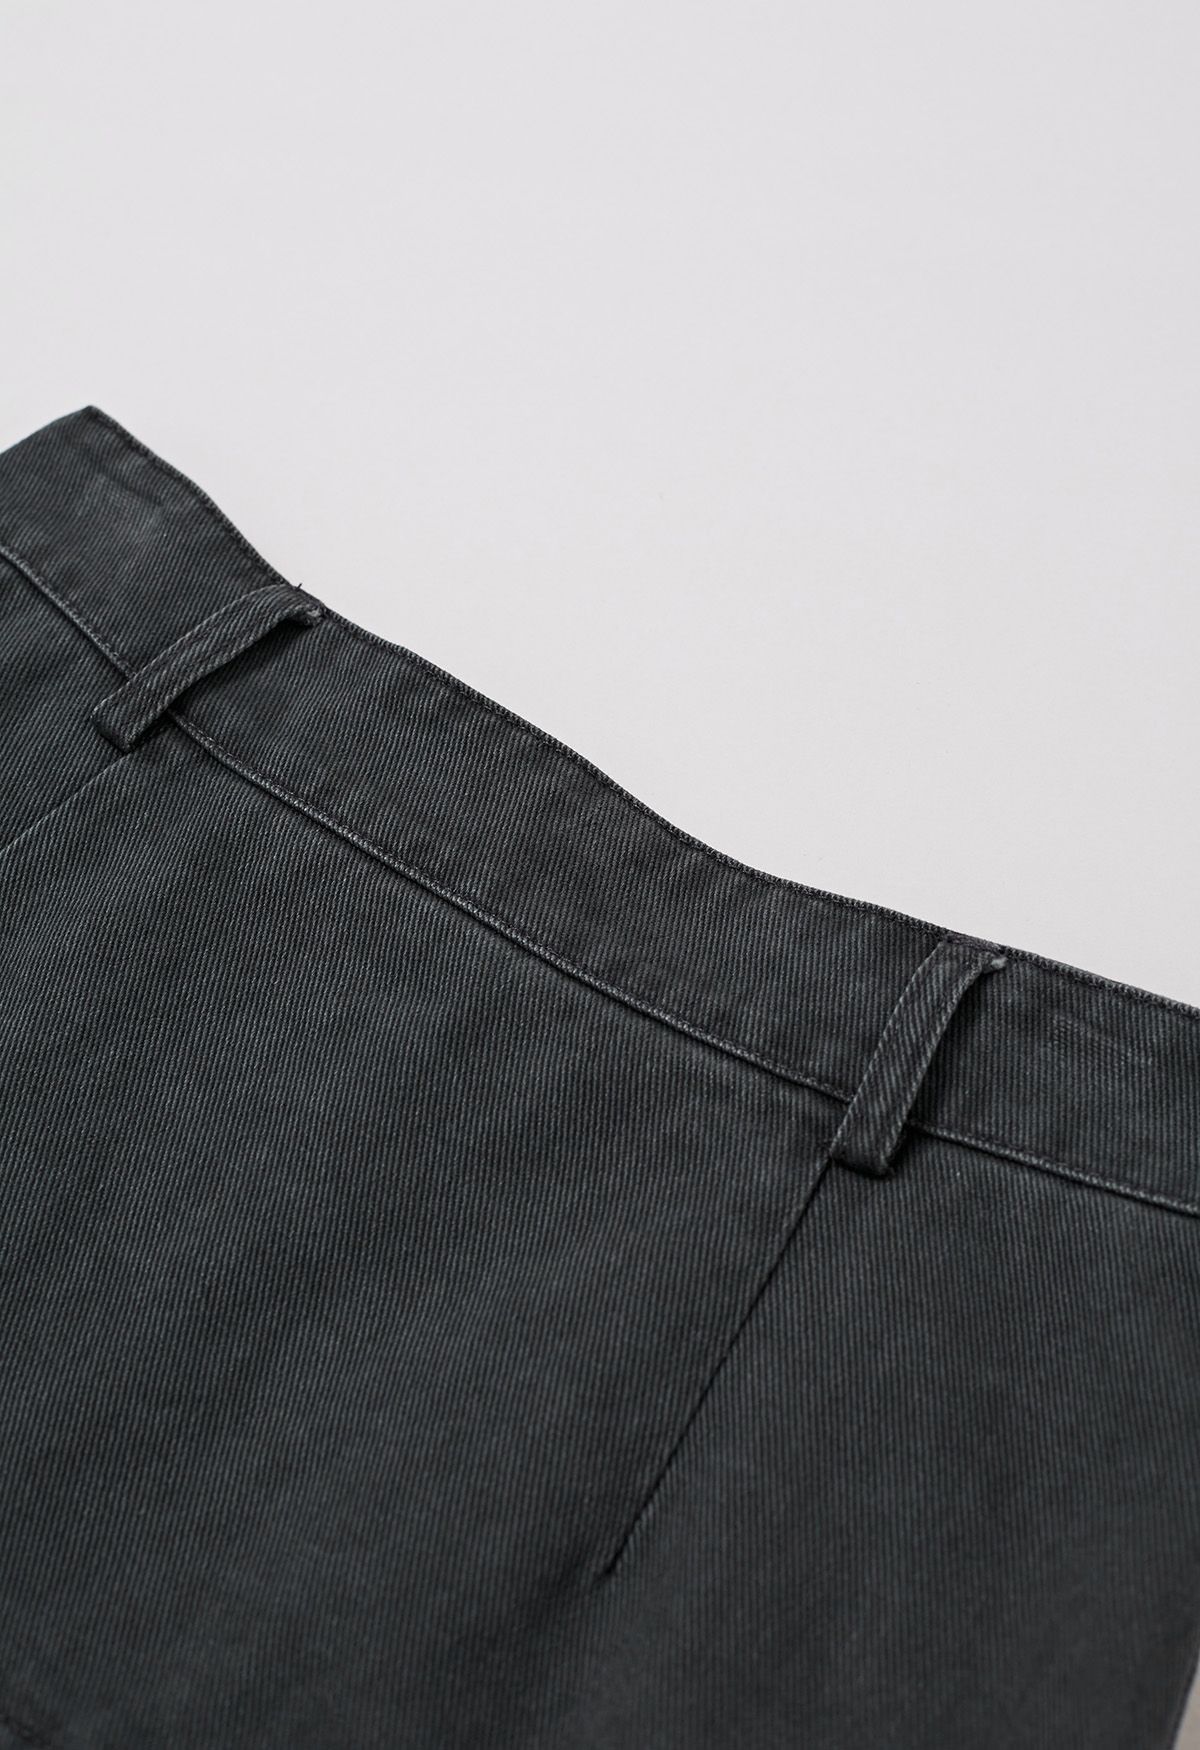 Mini-jupe évasée en jean au design distinctif, fumée